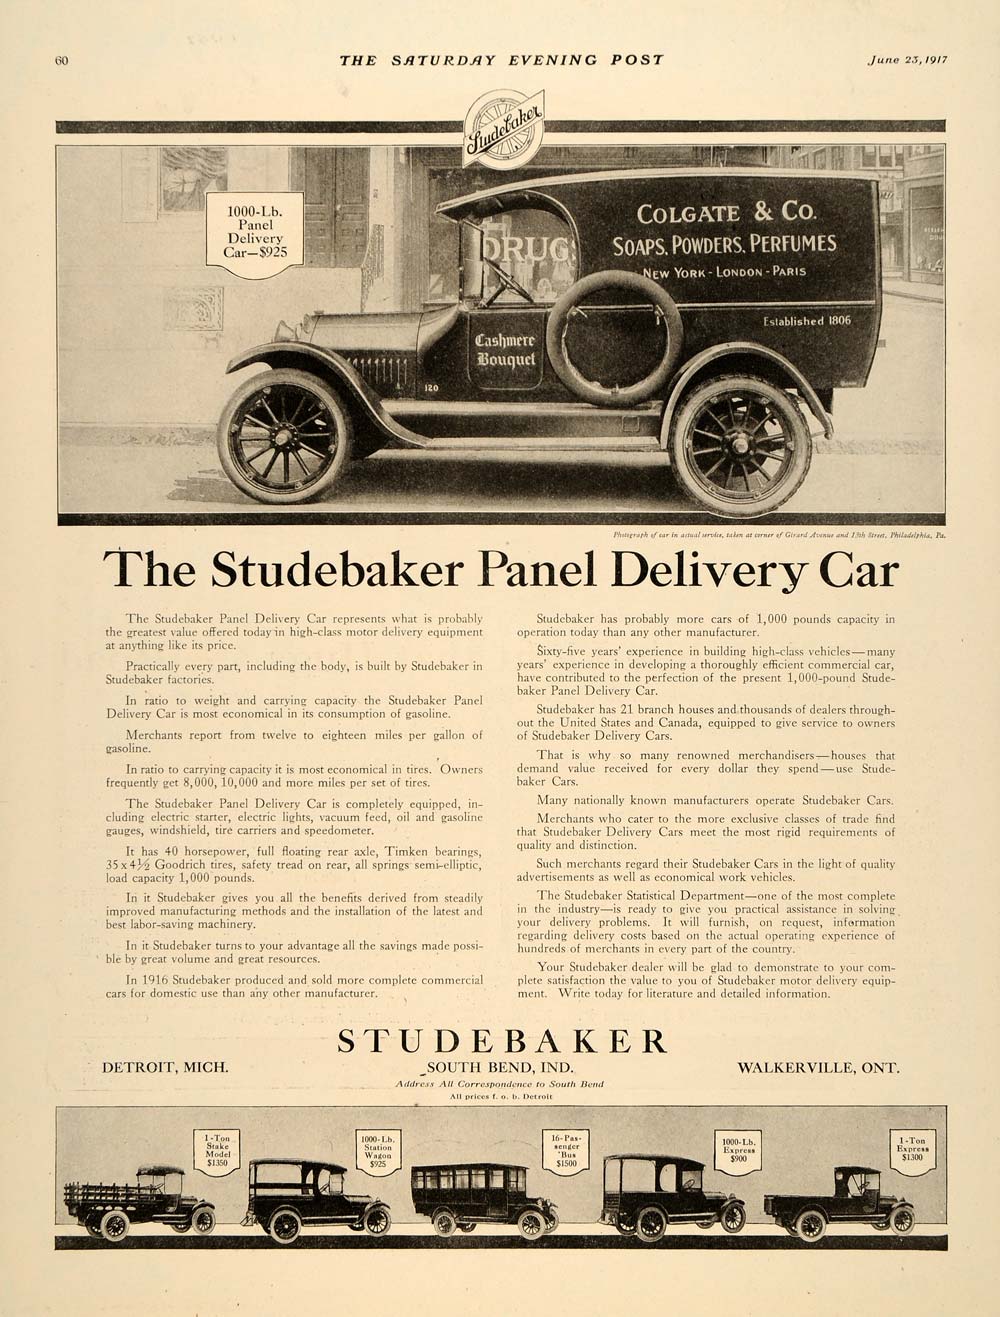 1917 Ad Studebaker Panel Delivery Car South Bend Ind. - ORIGINAL SEP4